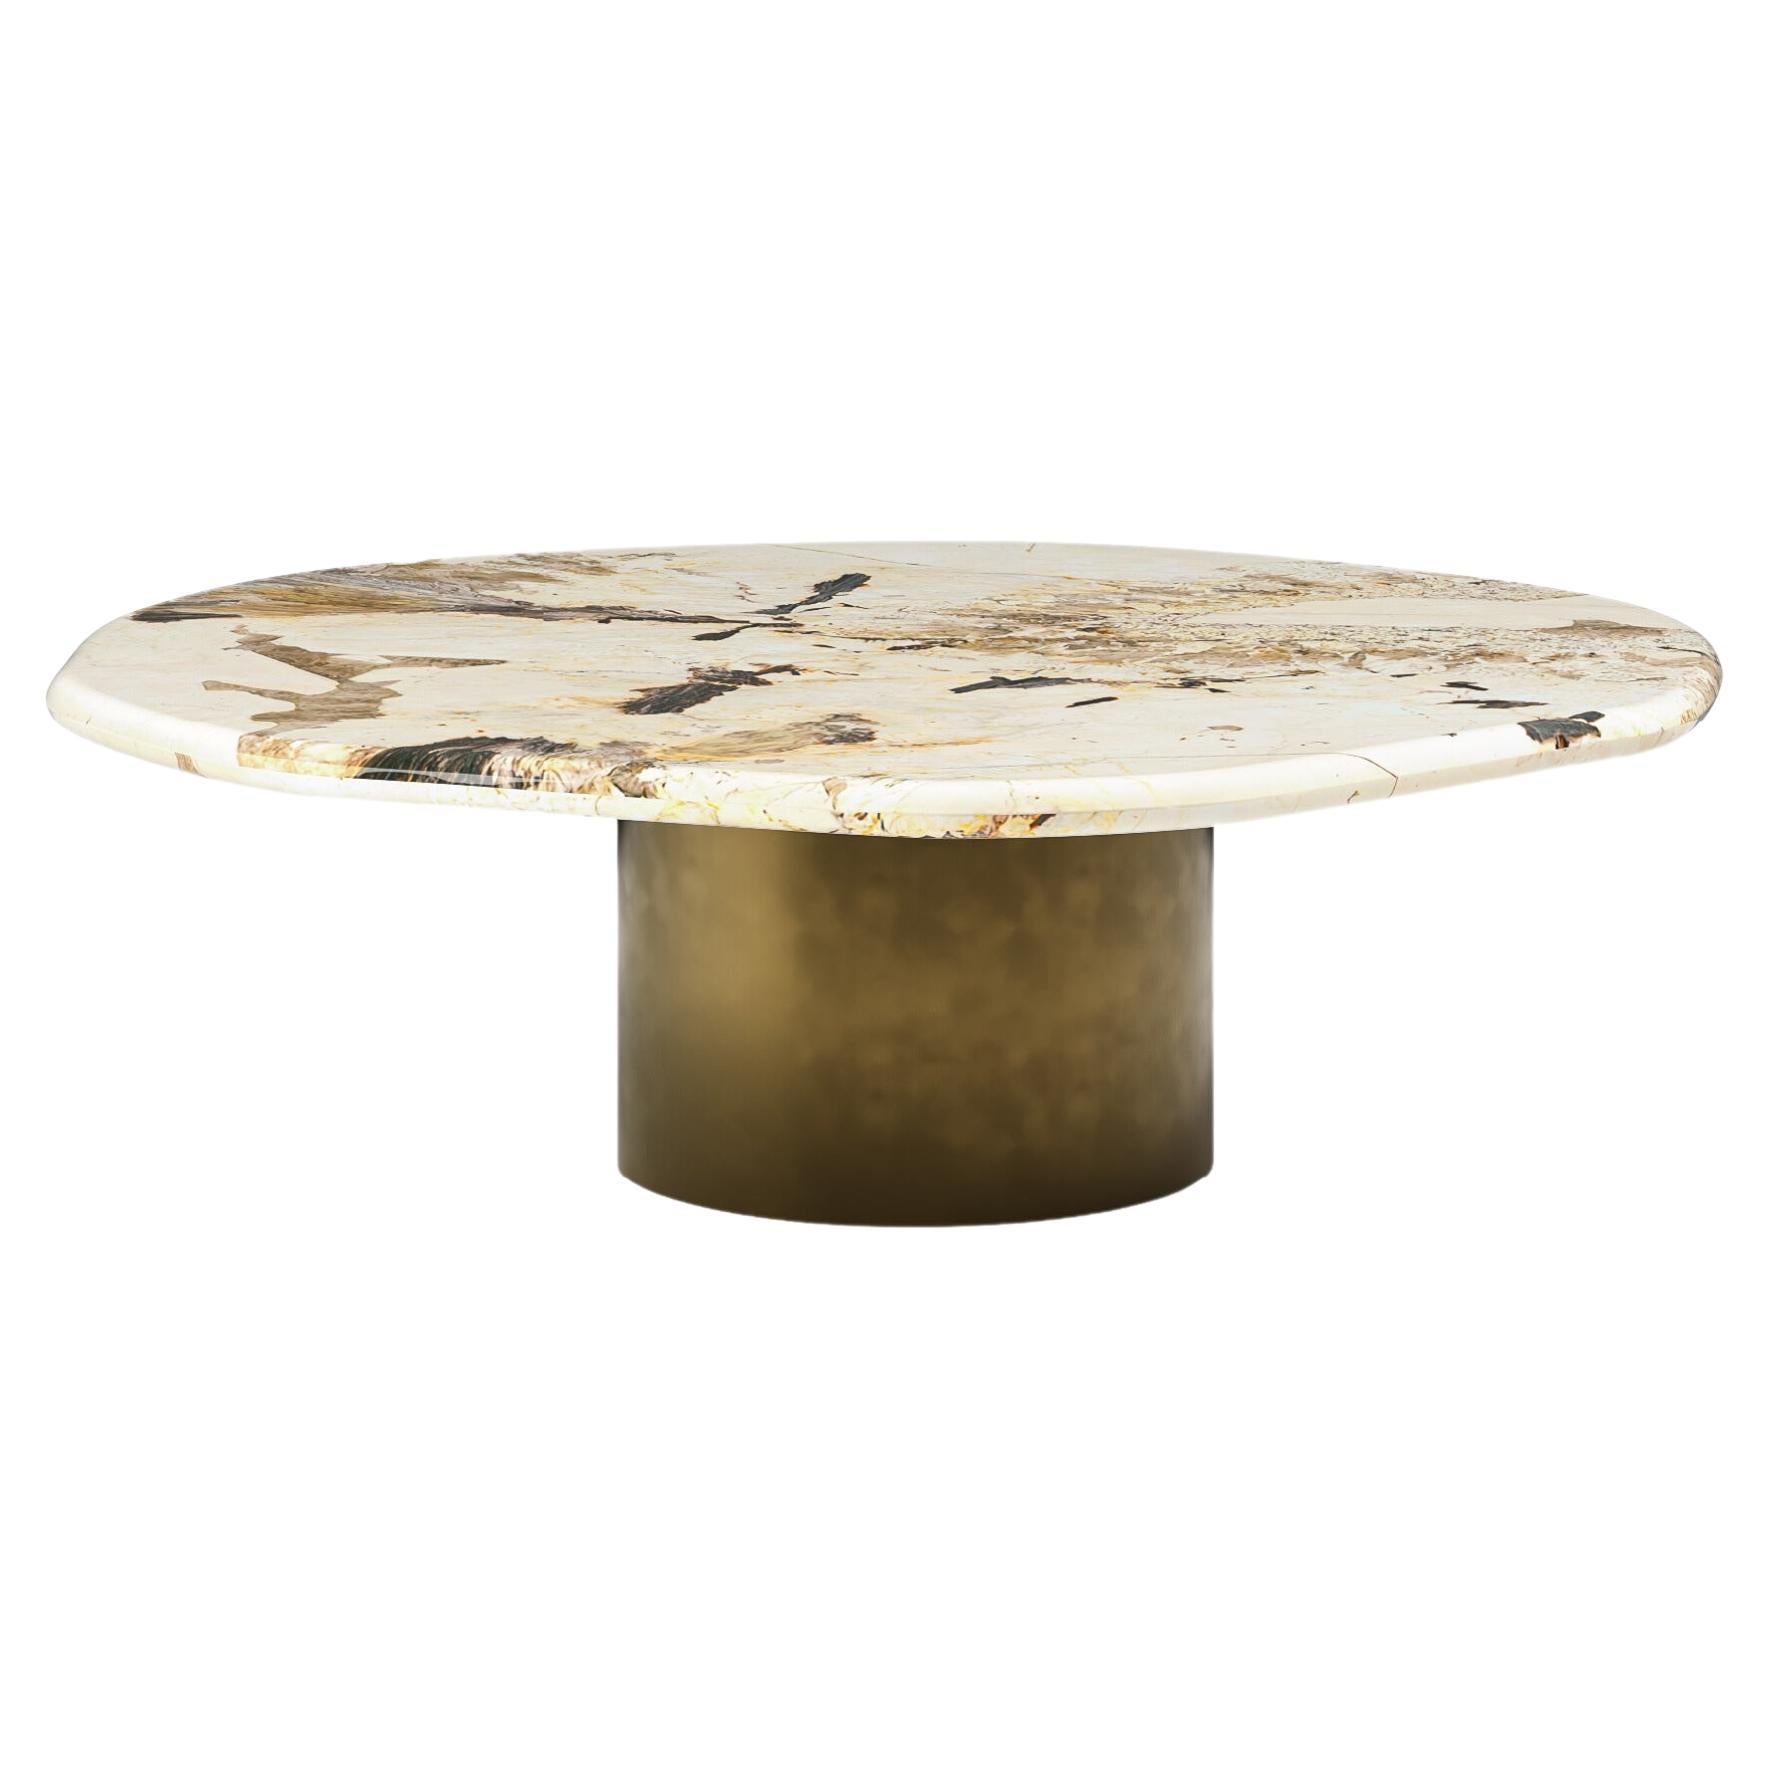 FORM(LA) Lago Round Coffee Table 54”L x 54”W x 14”H Quartzite & Antique Bronze For Sale